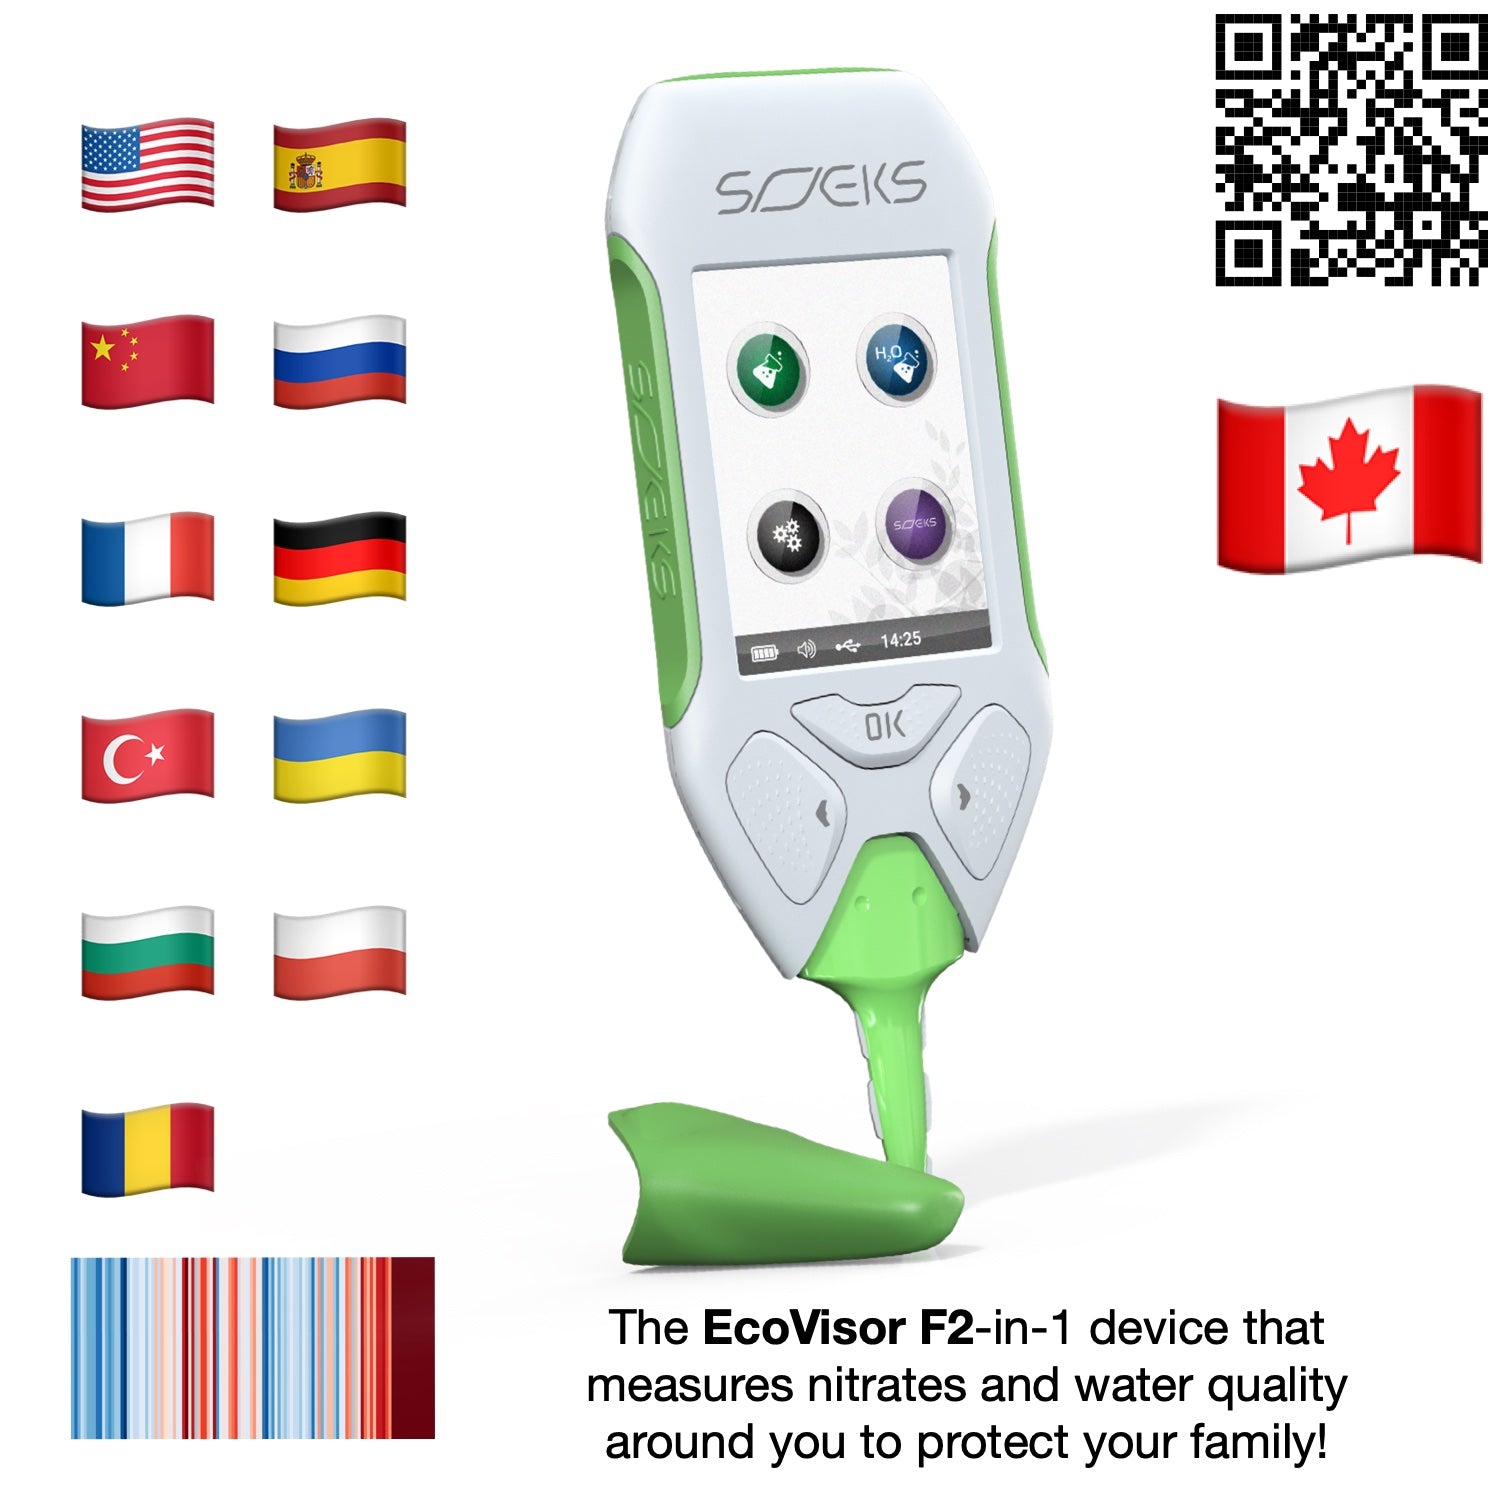 EcoVisor F2, Interface in 11 languages: English, French, Spanish, Chinese, Russian, German, Turkish, Ukrainian, Bulgarian, Poland, Romanian